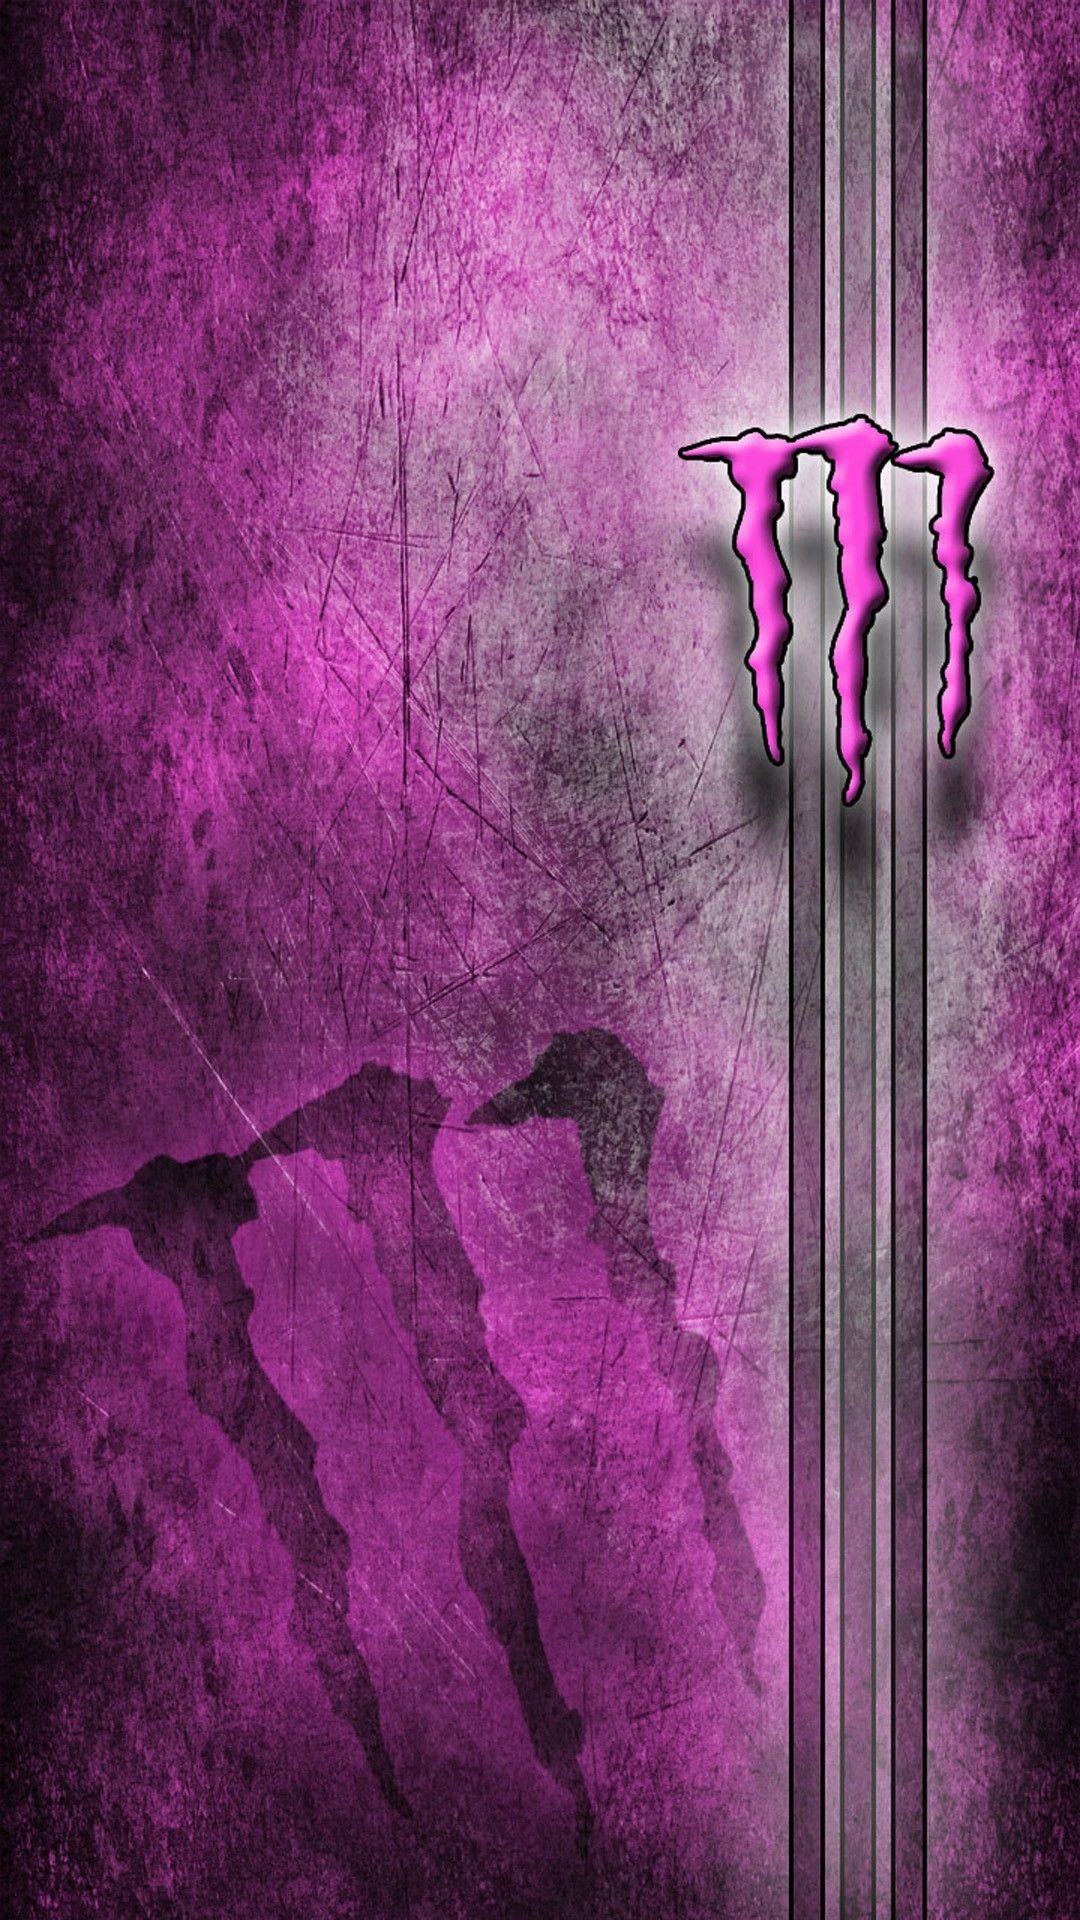 1080x1920 Iphone Backgrounds. Monster Energy Drink Logo, Cellphone Wallpaper,  Abstract Backgrounds, Dark Art, Fox Racing